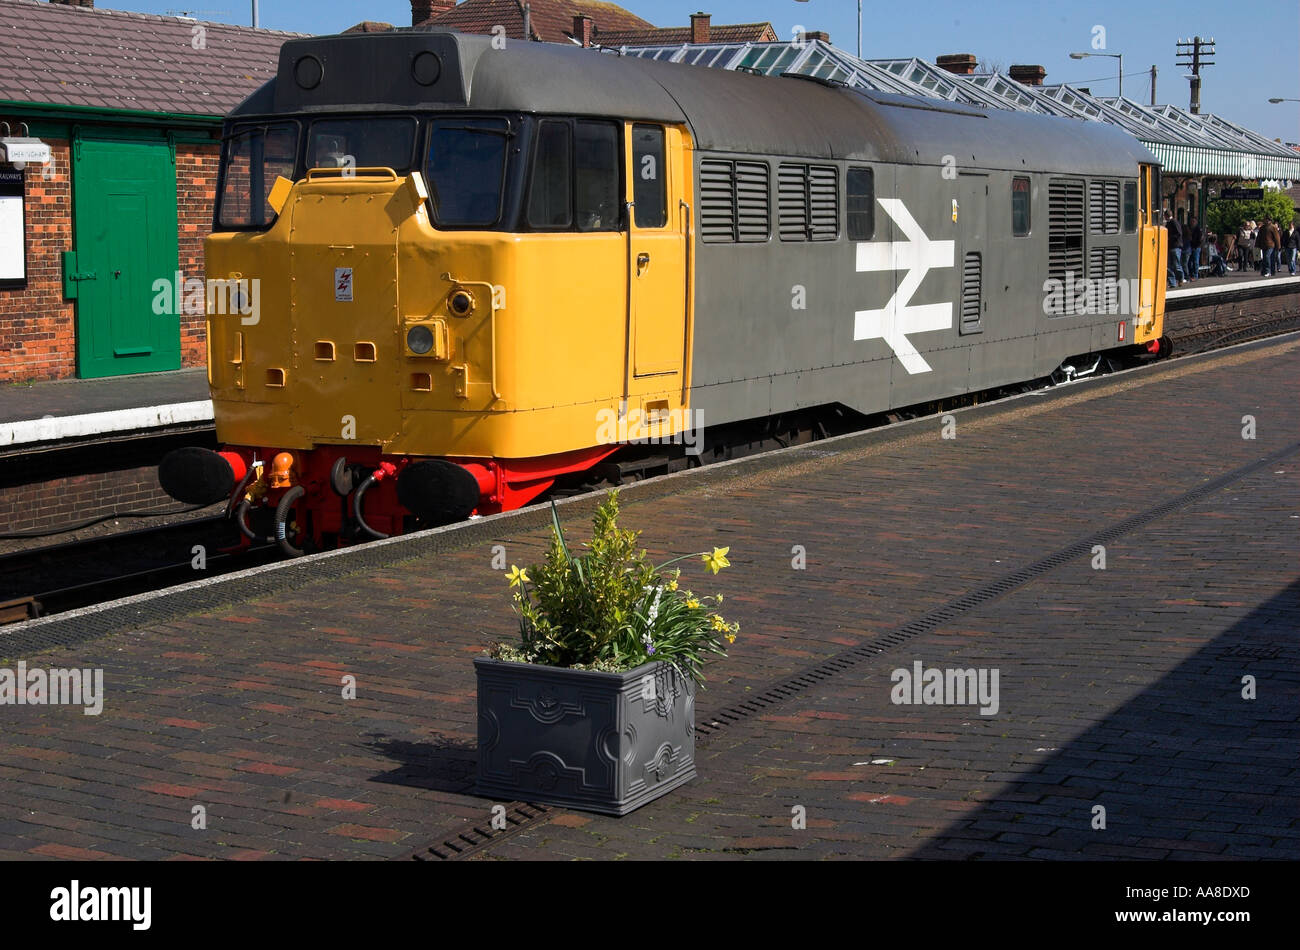 Class 31 diesel locomotive at Sheringham, North Norfolk Railway, England. Stock Photo